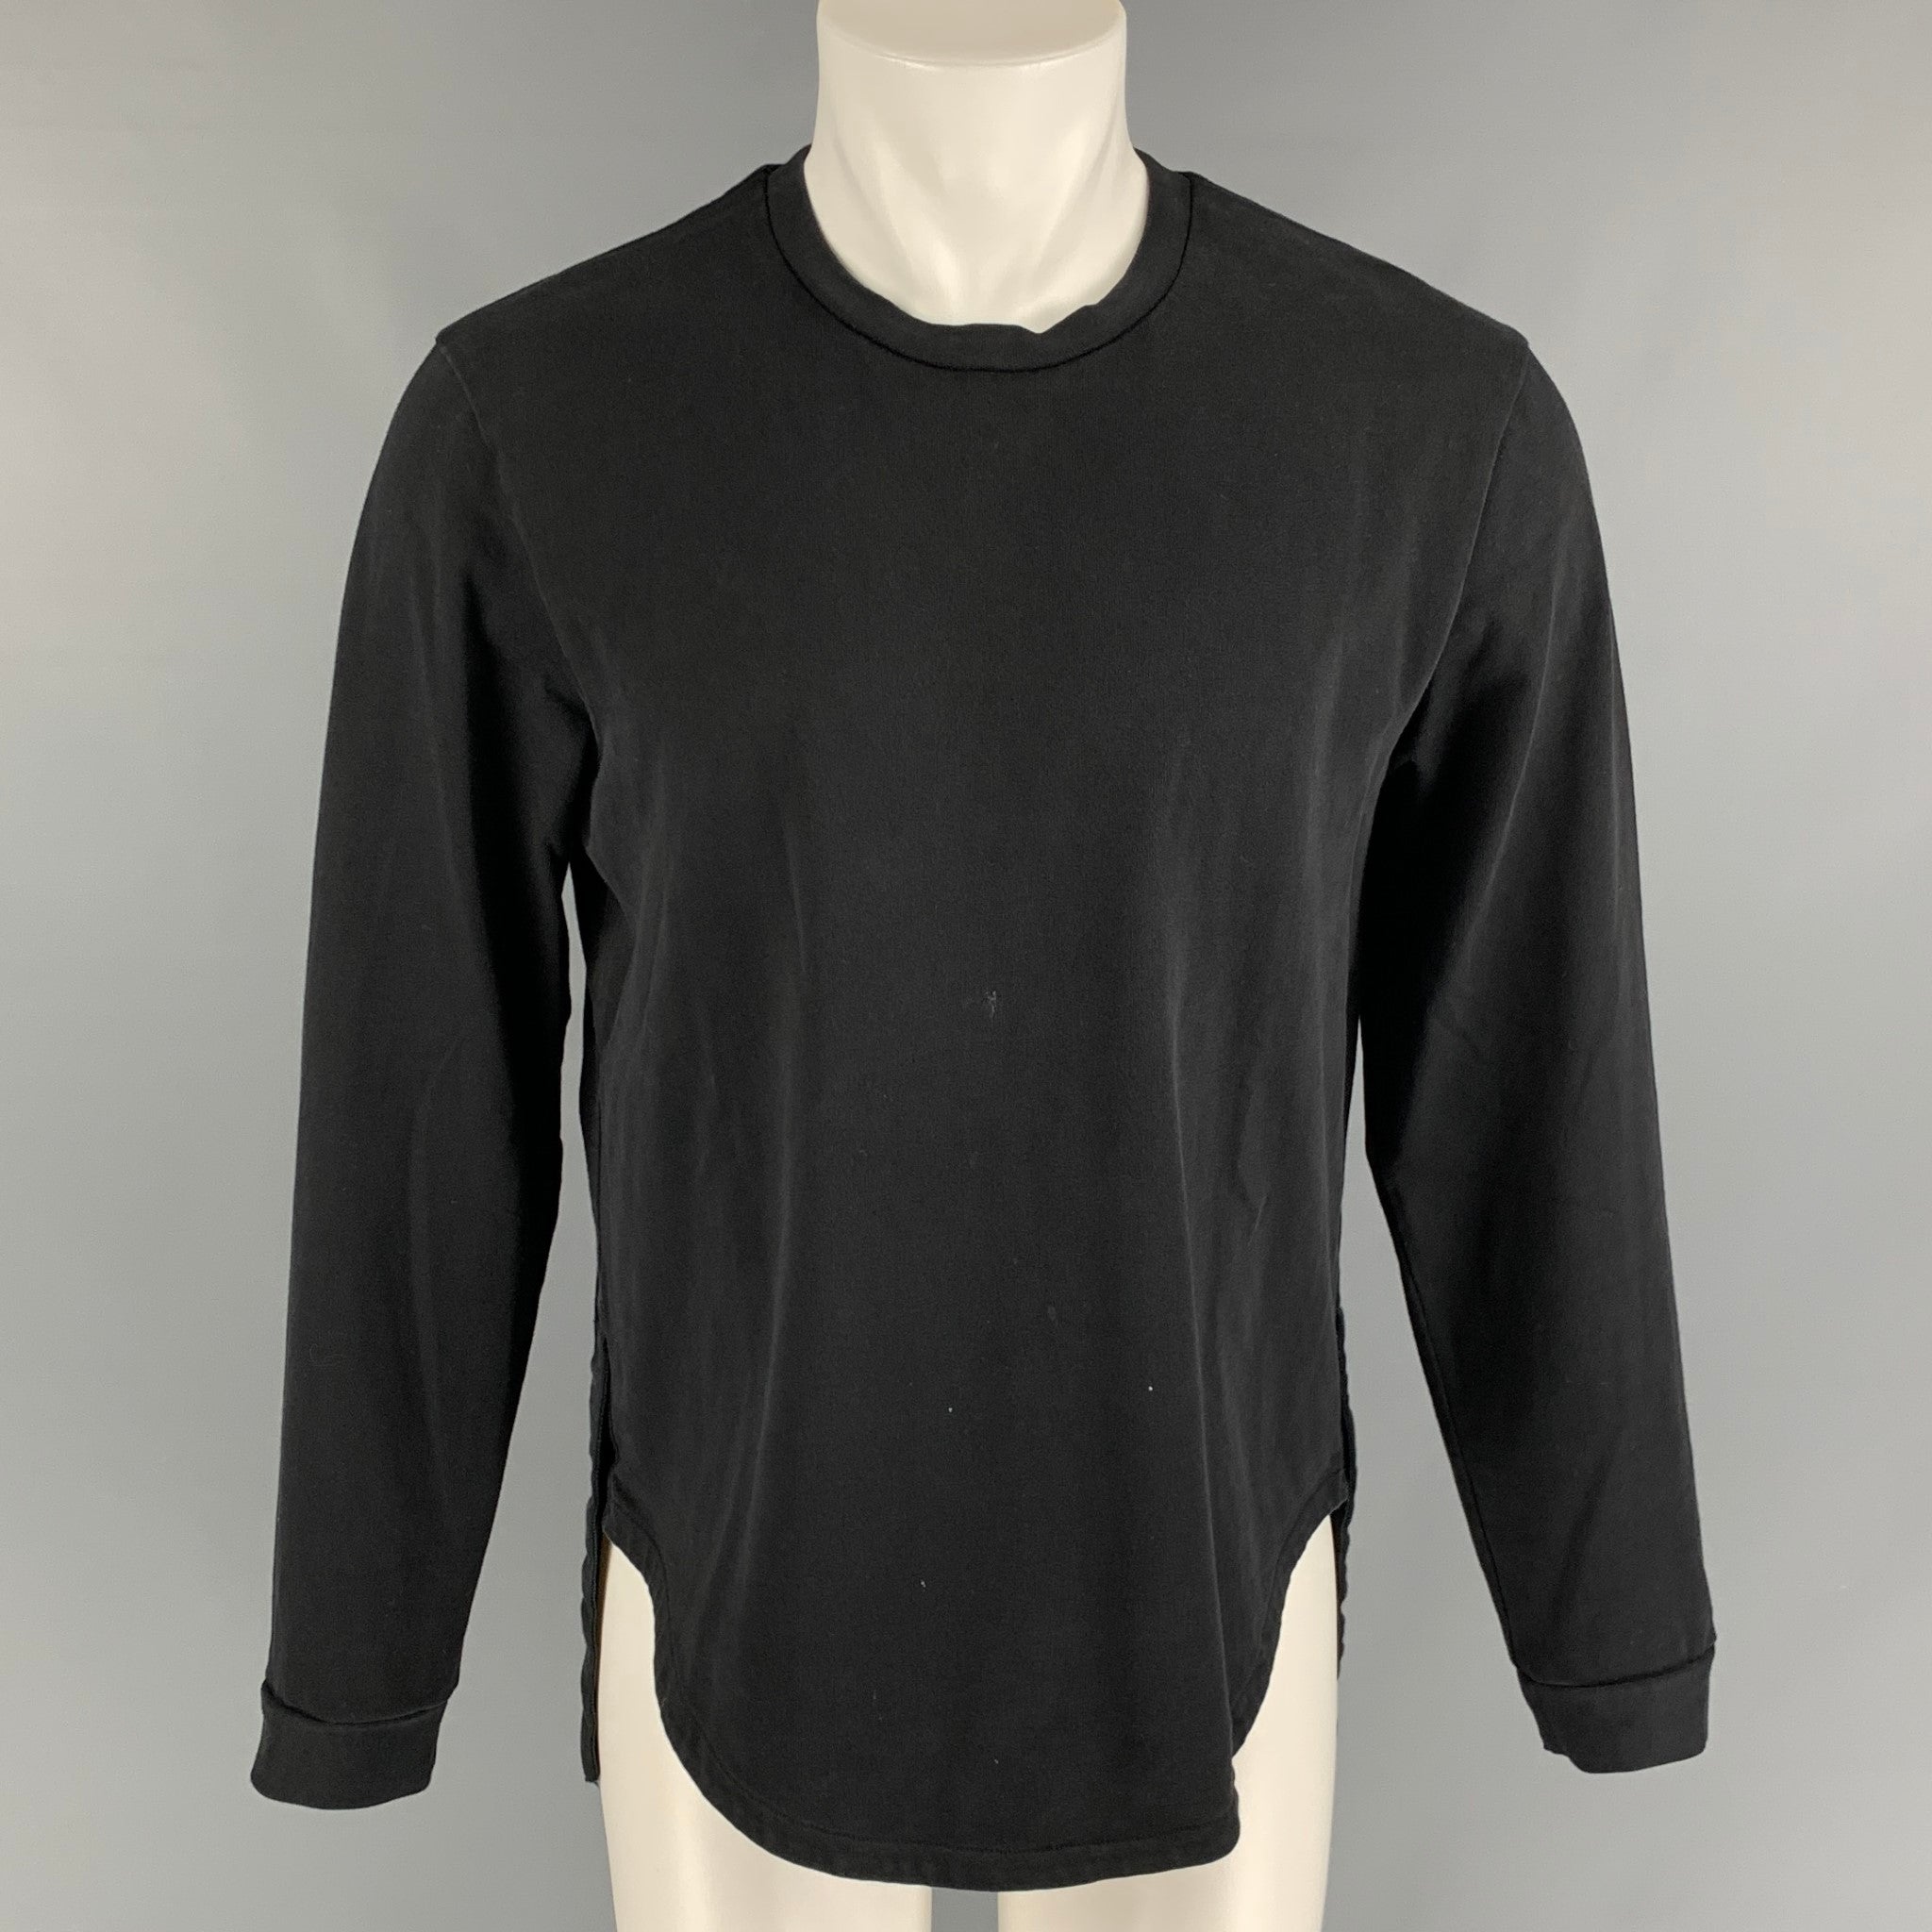 Louis Vuitton - Authenticated Sweatshirt - Cotton Navy Plain for Men, Very Good Condition